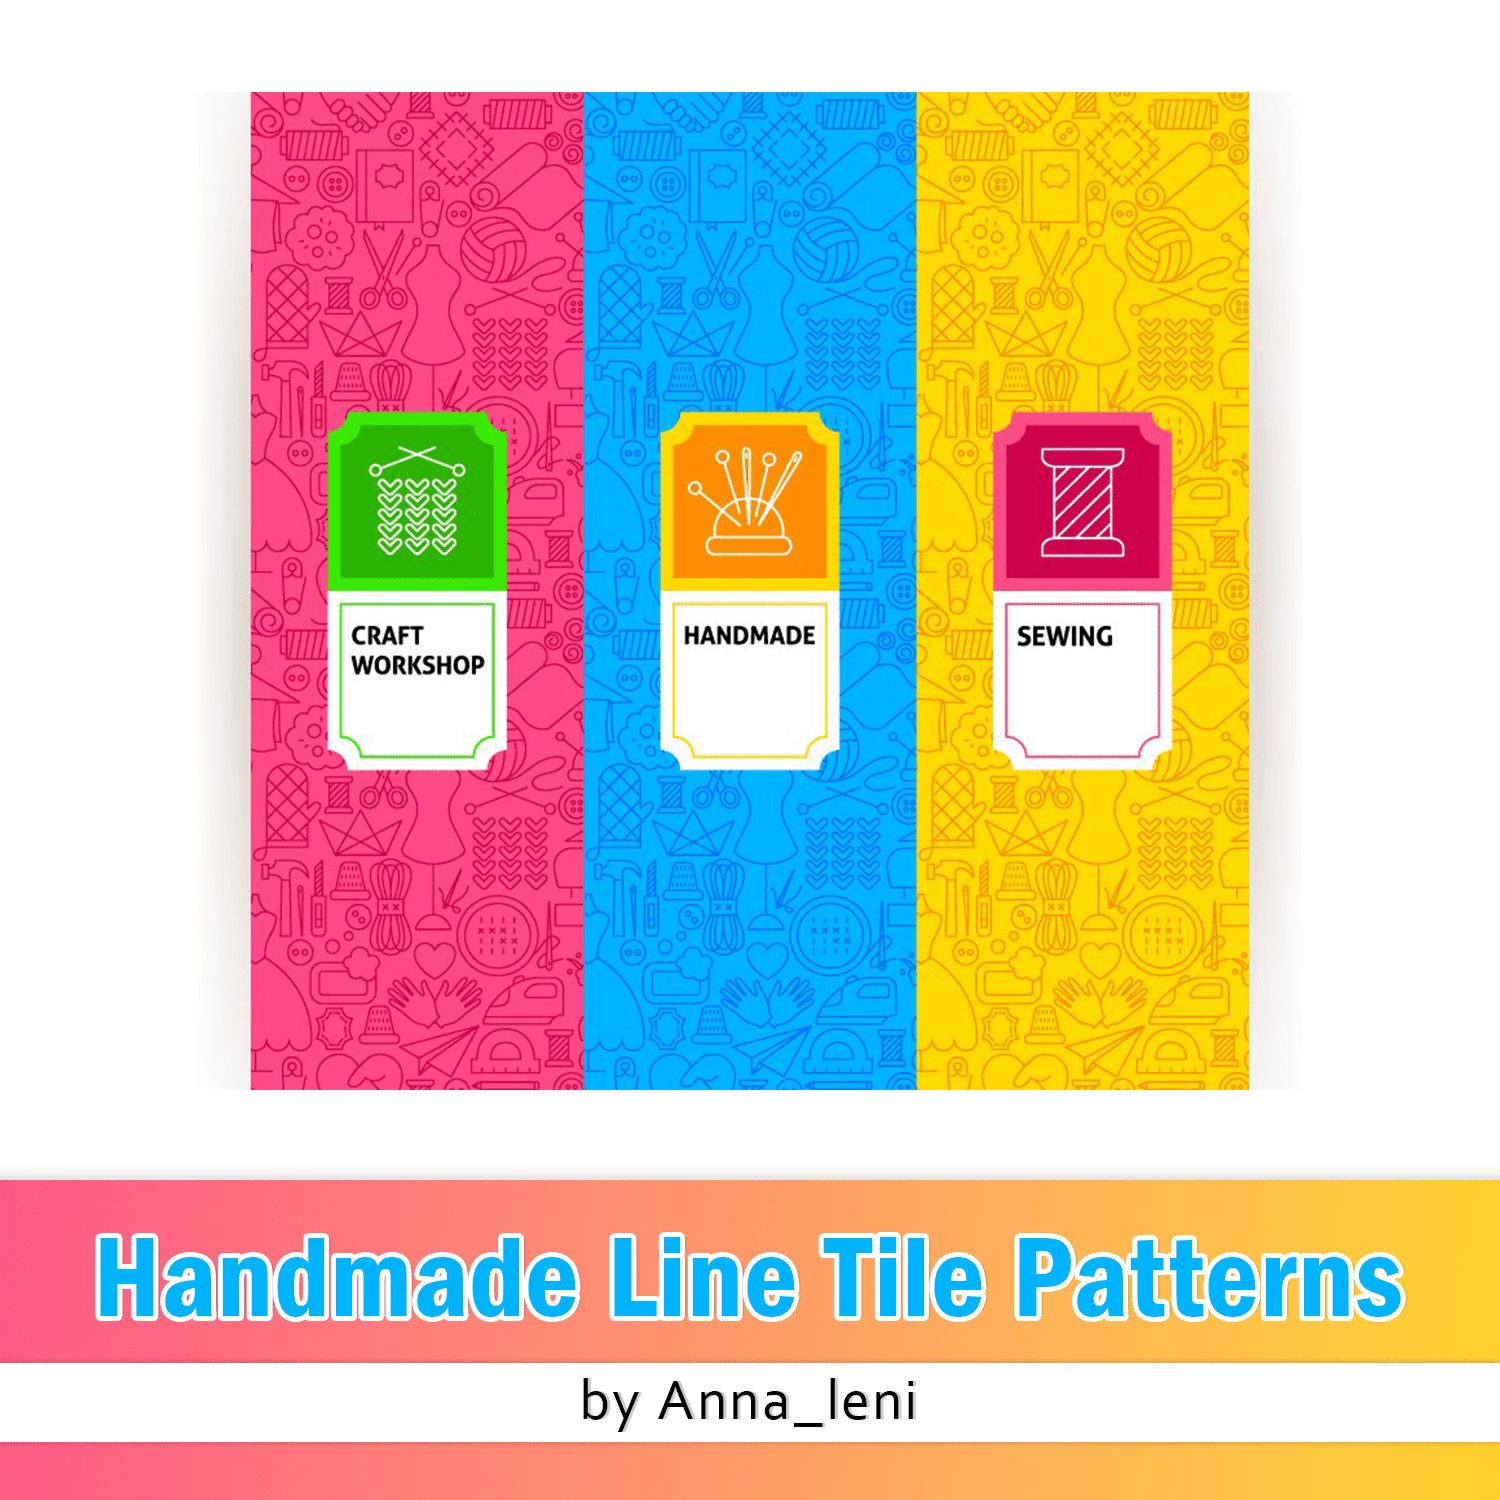 Handmade Line Tile Patterns cover.